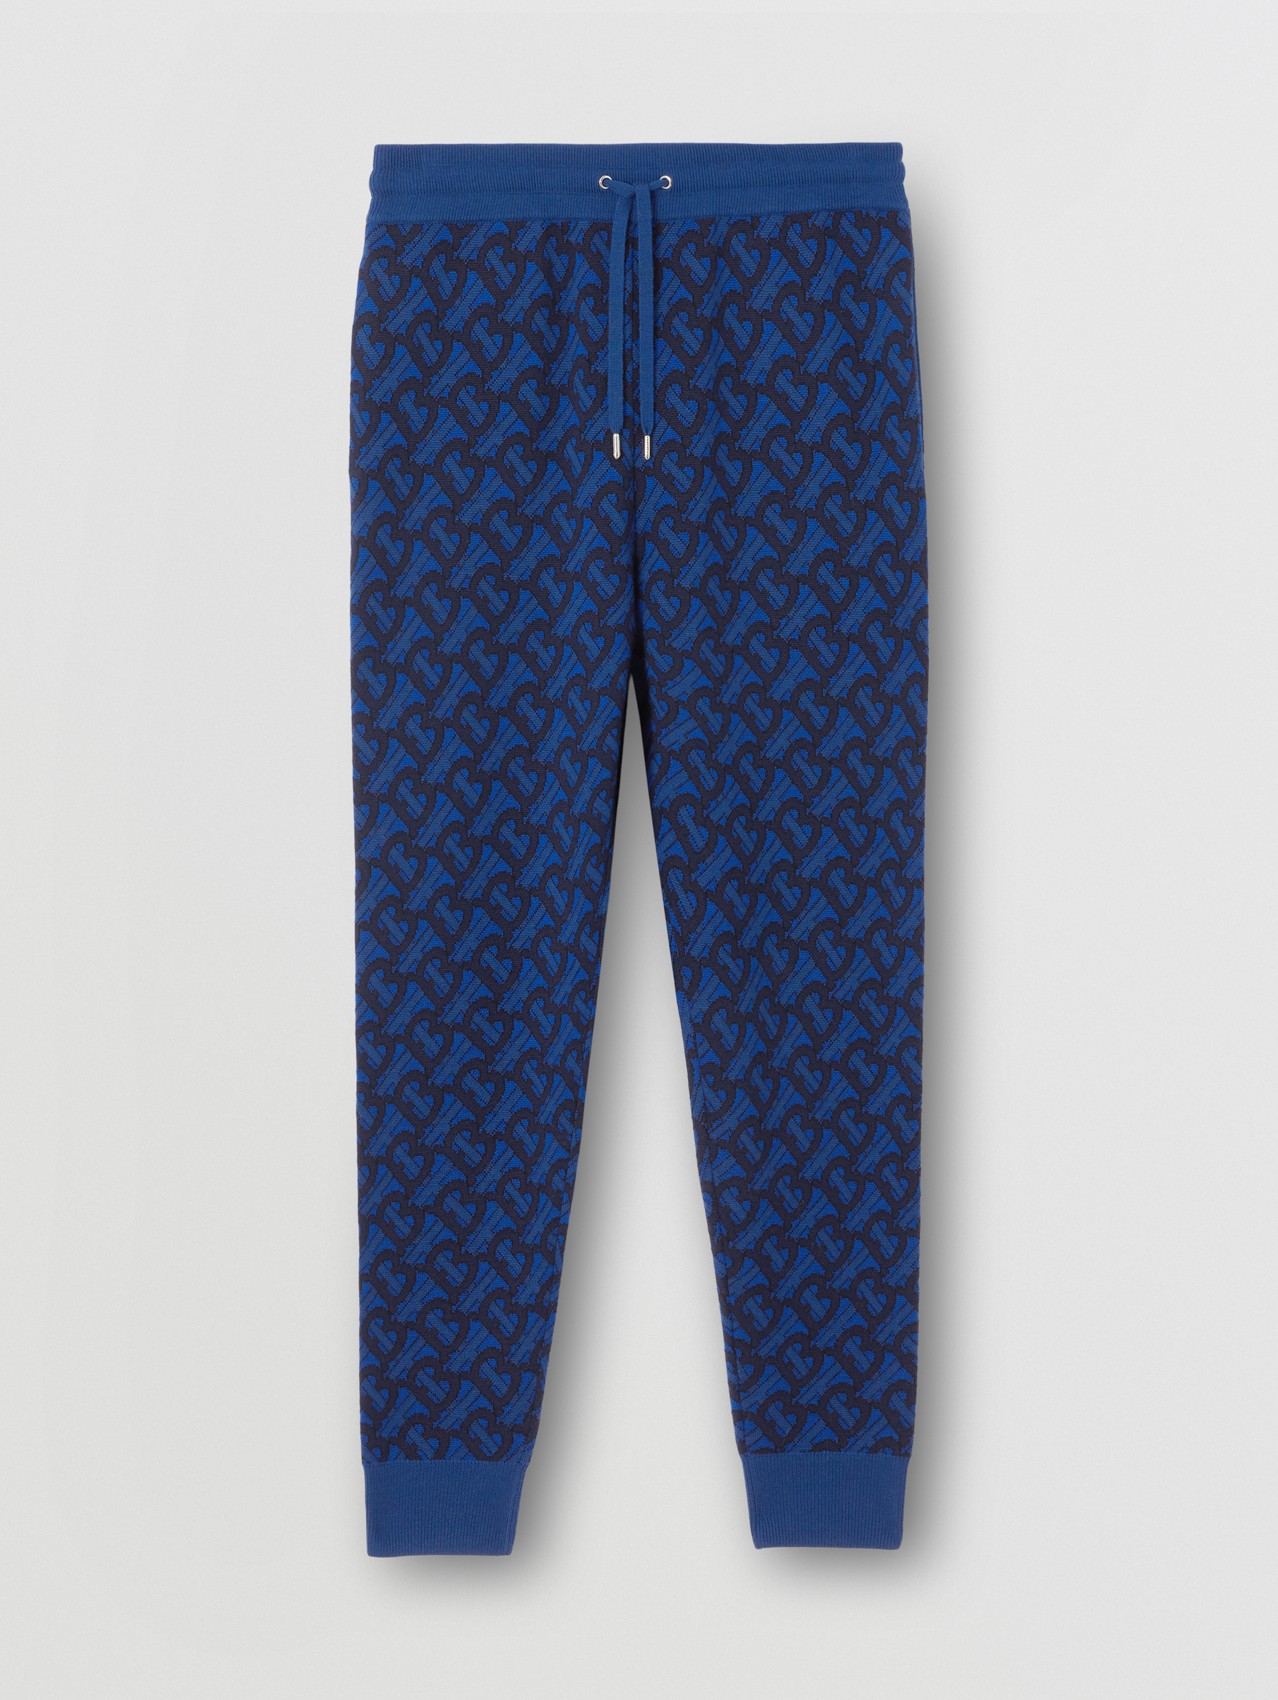 Monogram Wool Jacquard Jogging Pants in Royal Blue